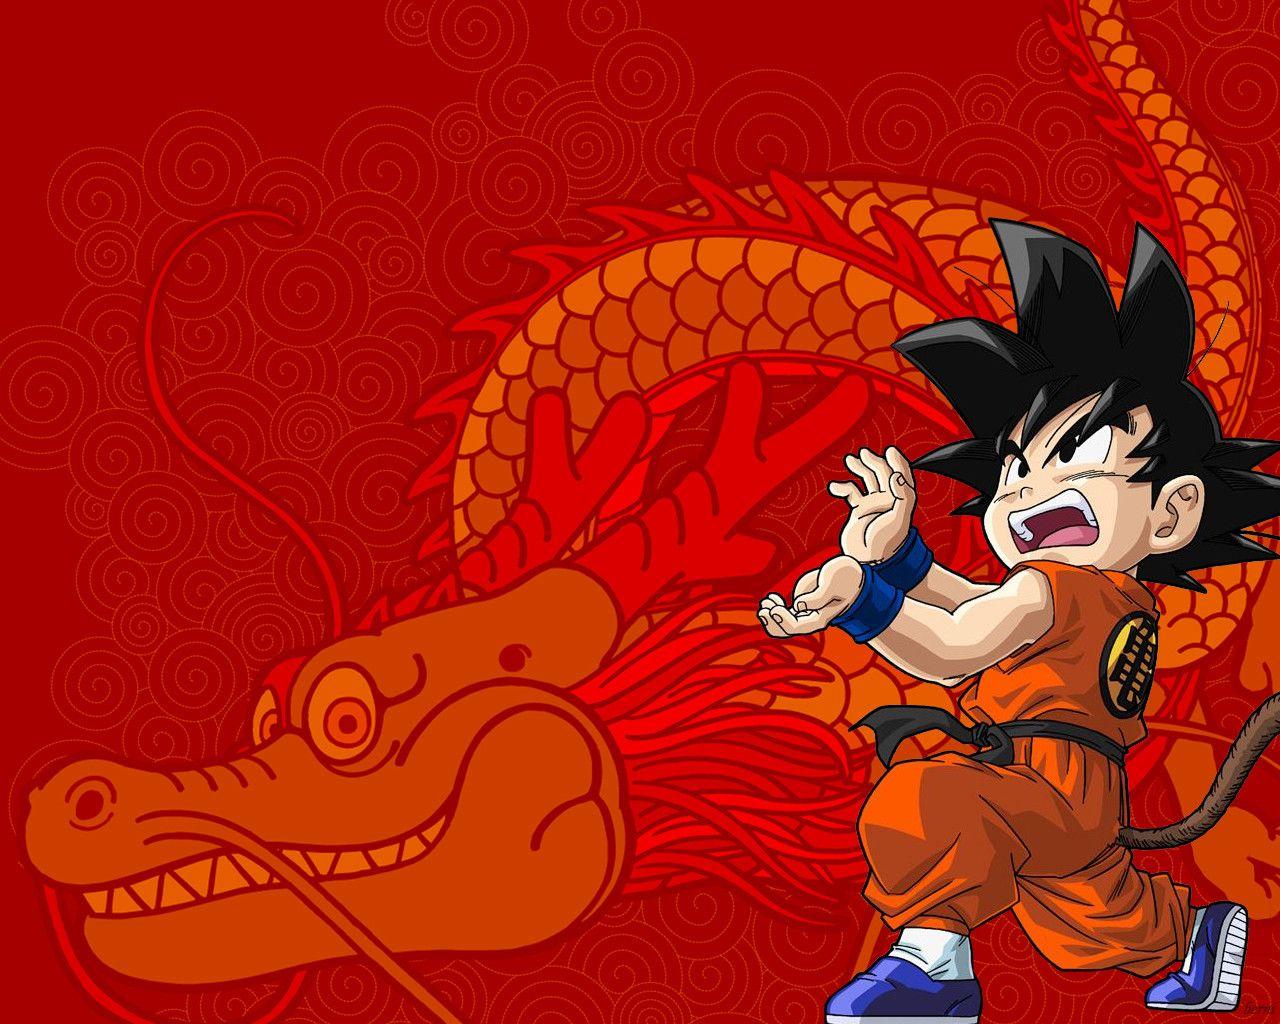 Best Goku Wallpaper HD for PC Dragon Ball Z. Goku wallpaper